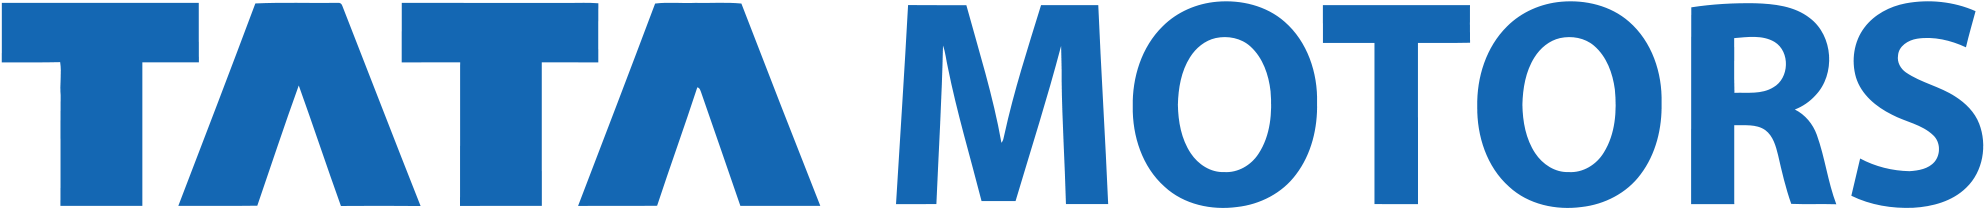 Tata Motors Logo Blue Background PNG image